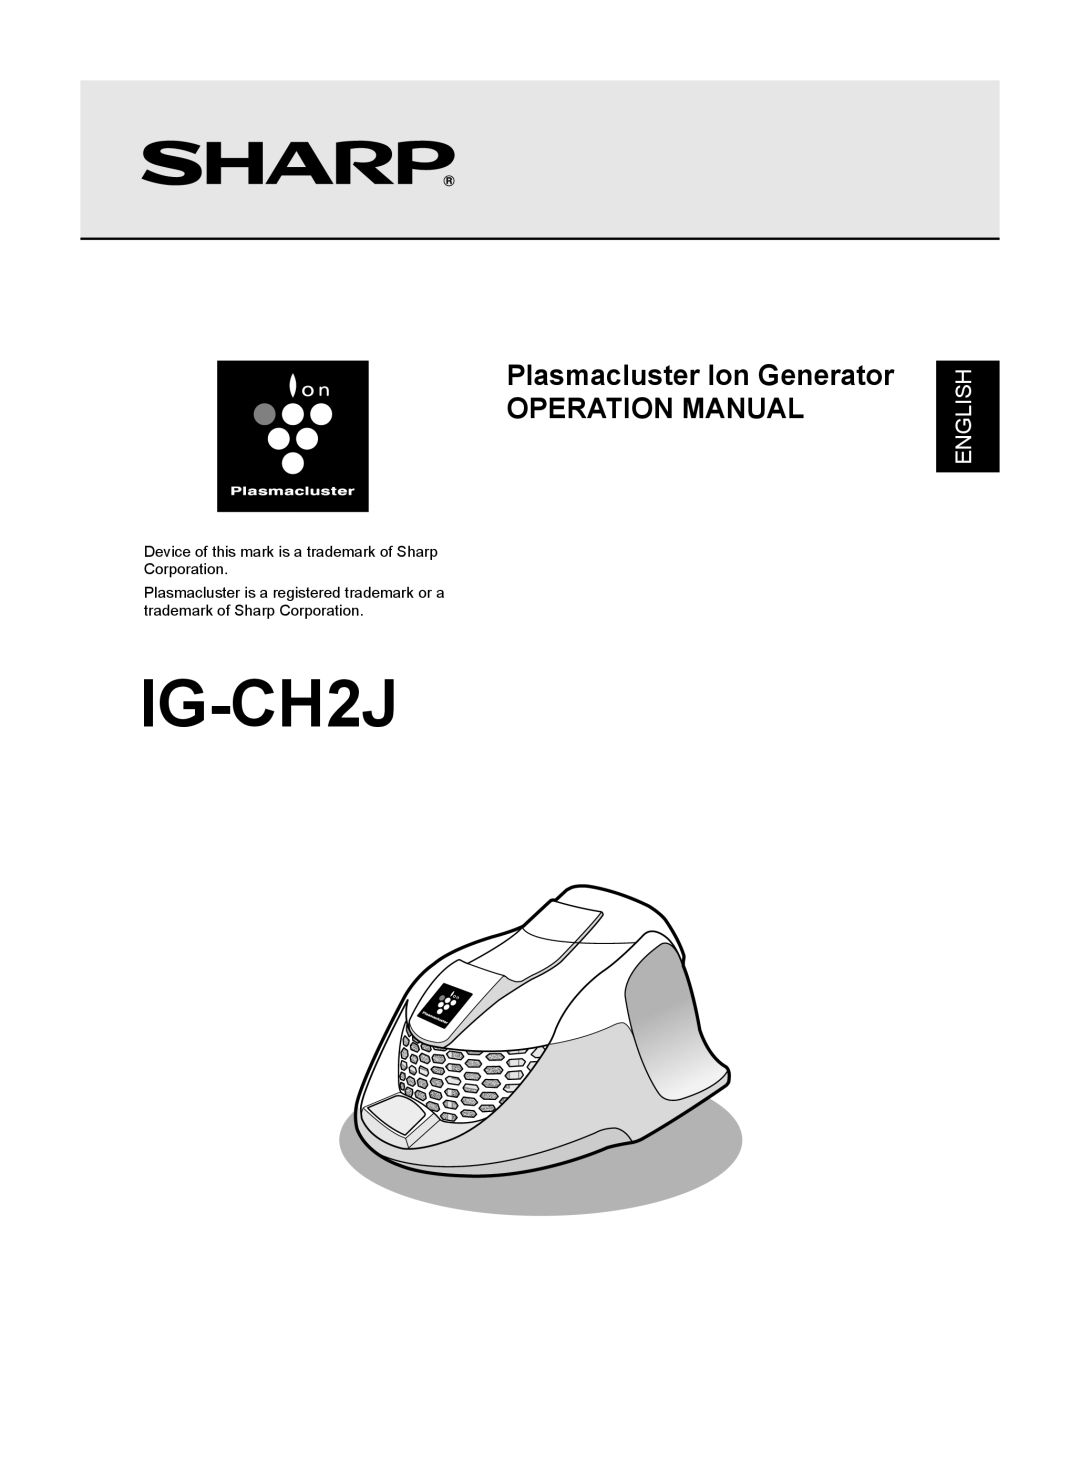 Sharp IG-CH2J operation manual Plasmacluster Ion Generator OPERATION MANUAL, English 